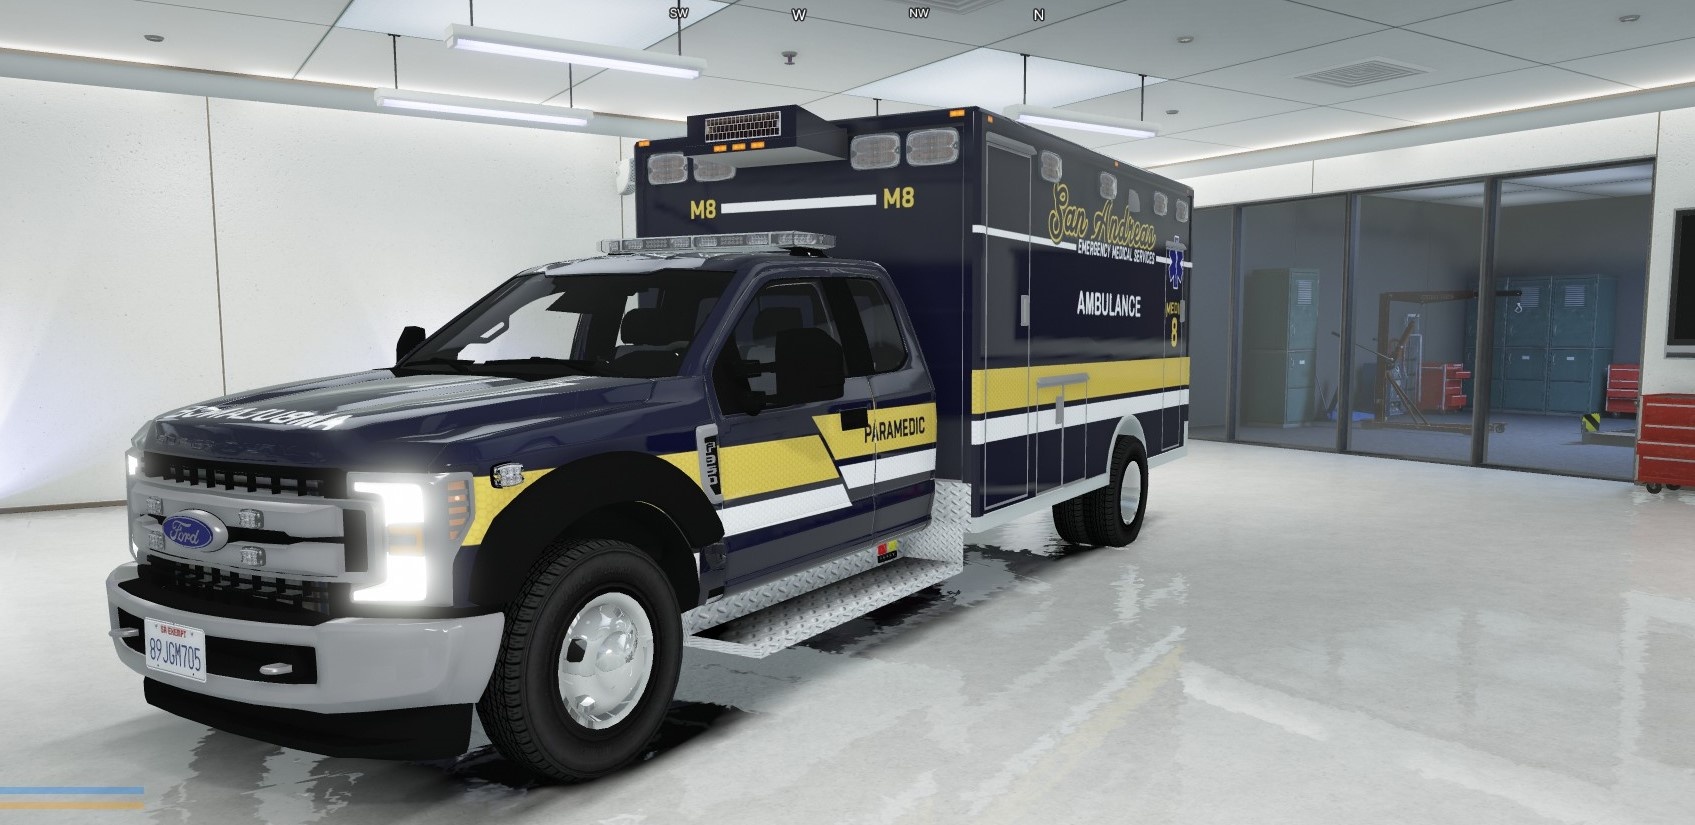 2018 Ford XLT F350 SuperDuty Extended Cab Ambulance (ELS) [Replace/FiveM] 1.0.01b